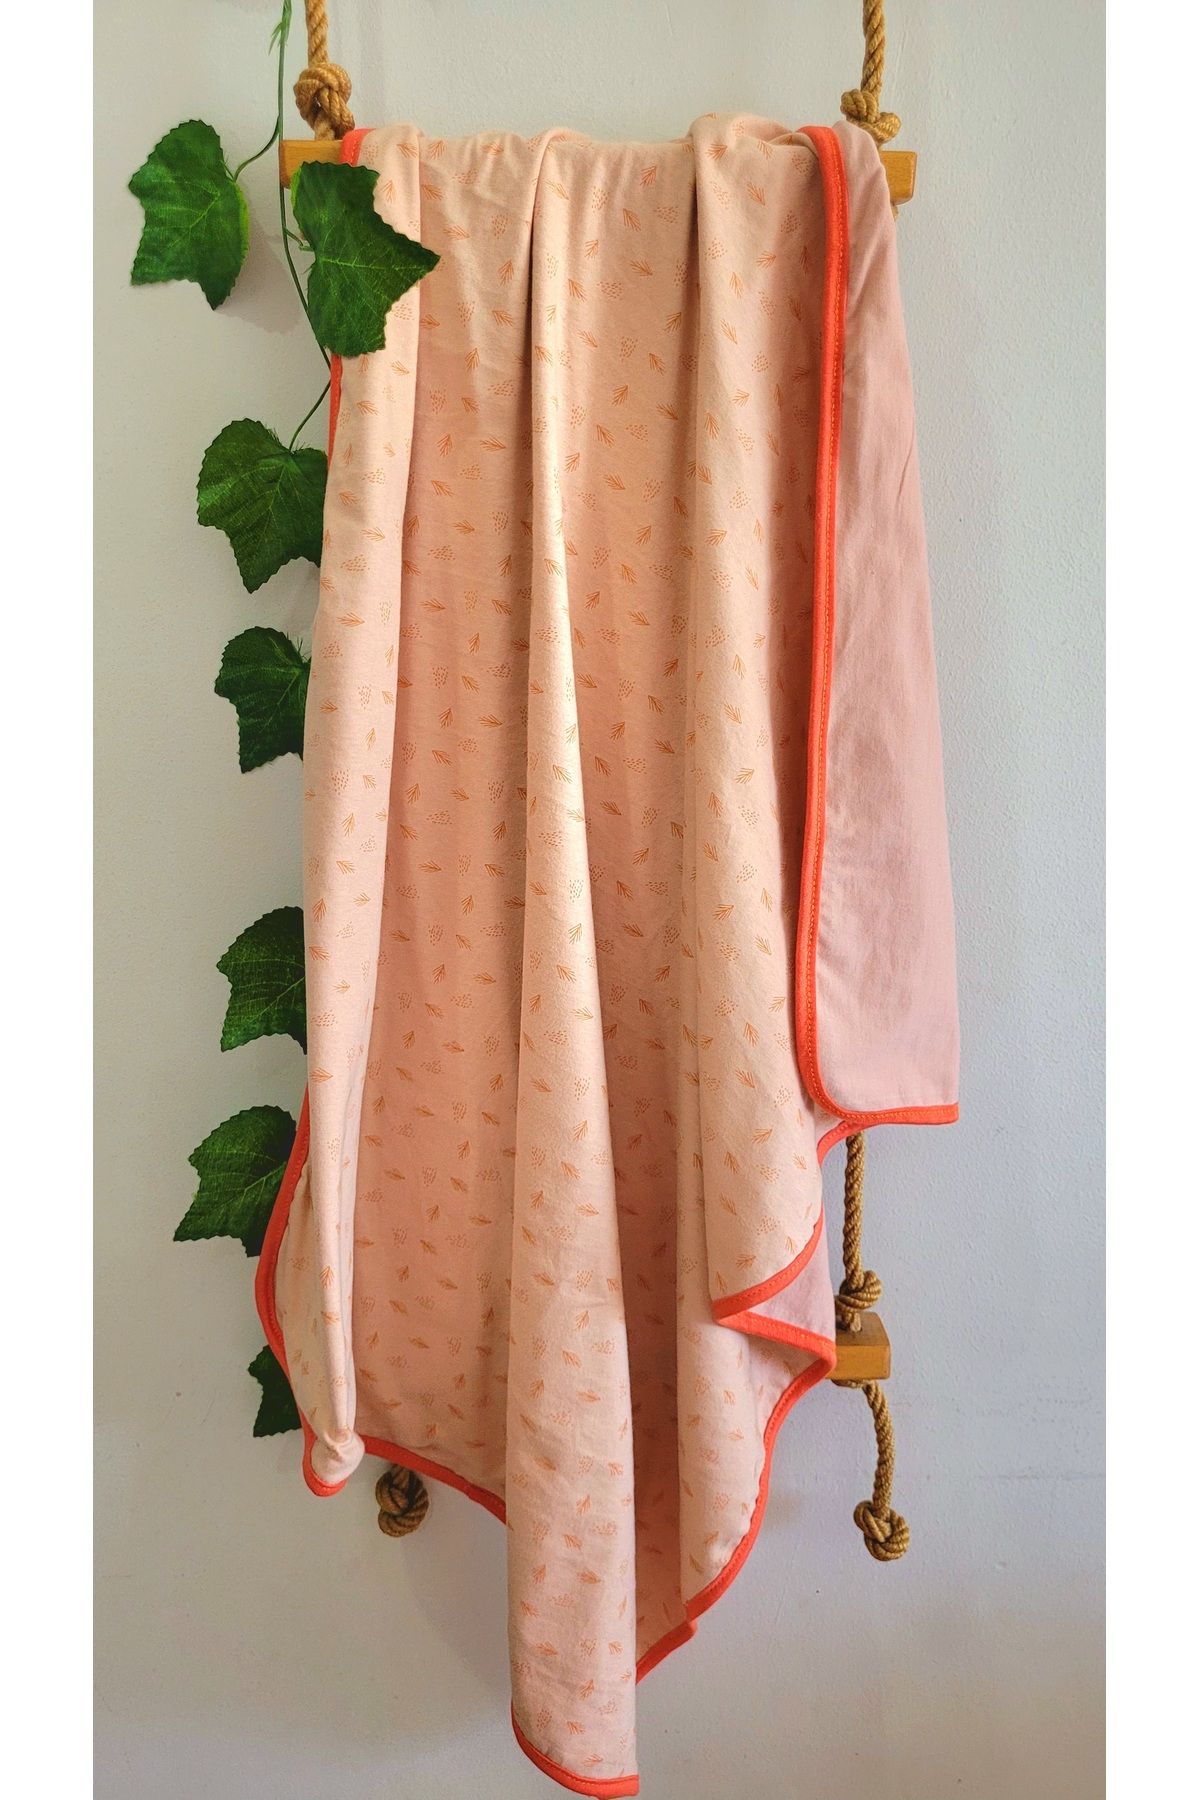 Alpar Tekstil Pamuklu Yumuşacık Çift Katlı Penye Kız- Erkek Bebek Kundak Battaniyesi Outlet/turuncu